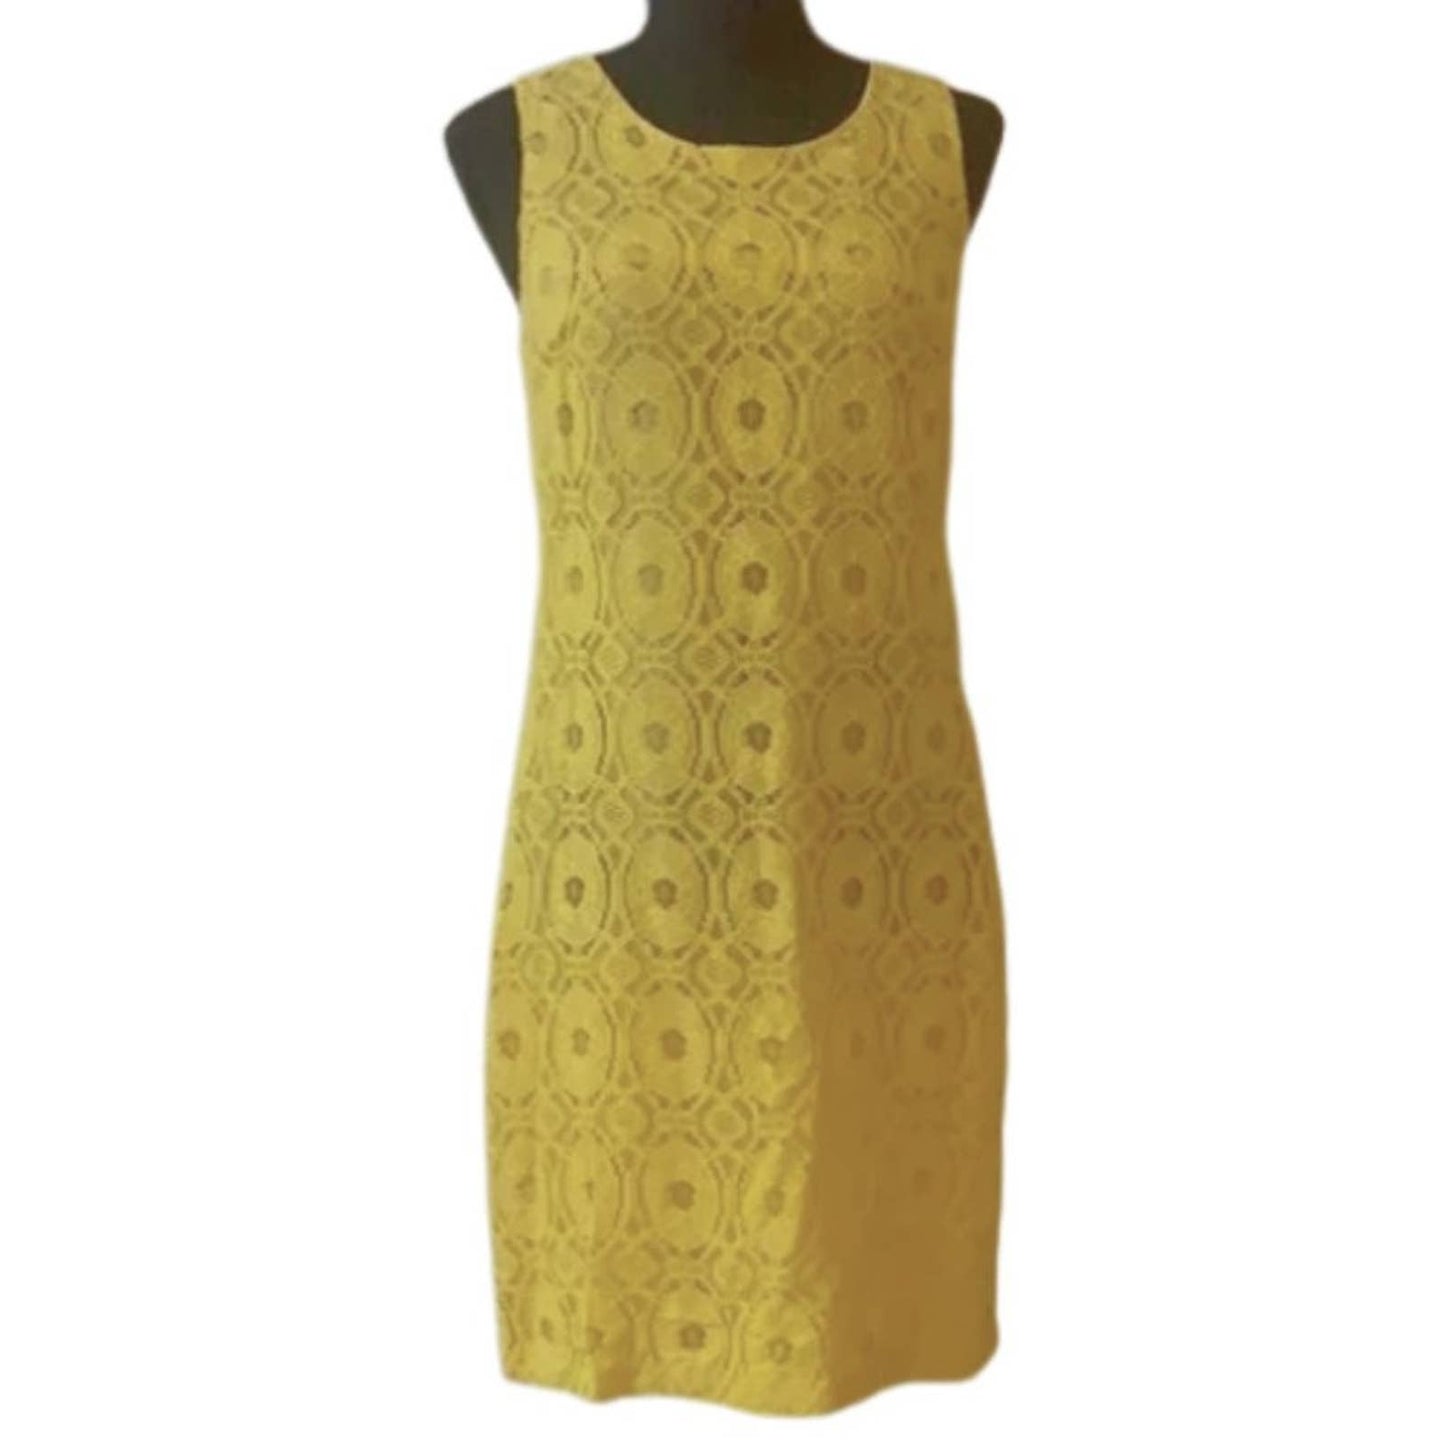 Nine West Lace Sheath Sleeveless Dress Lemon Drop Yellow NWT Size 6